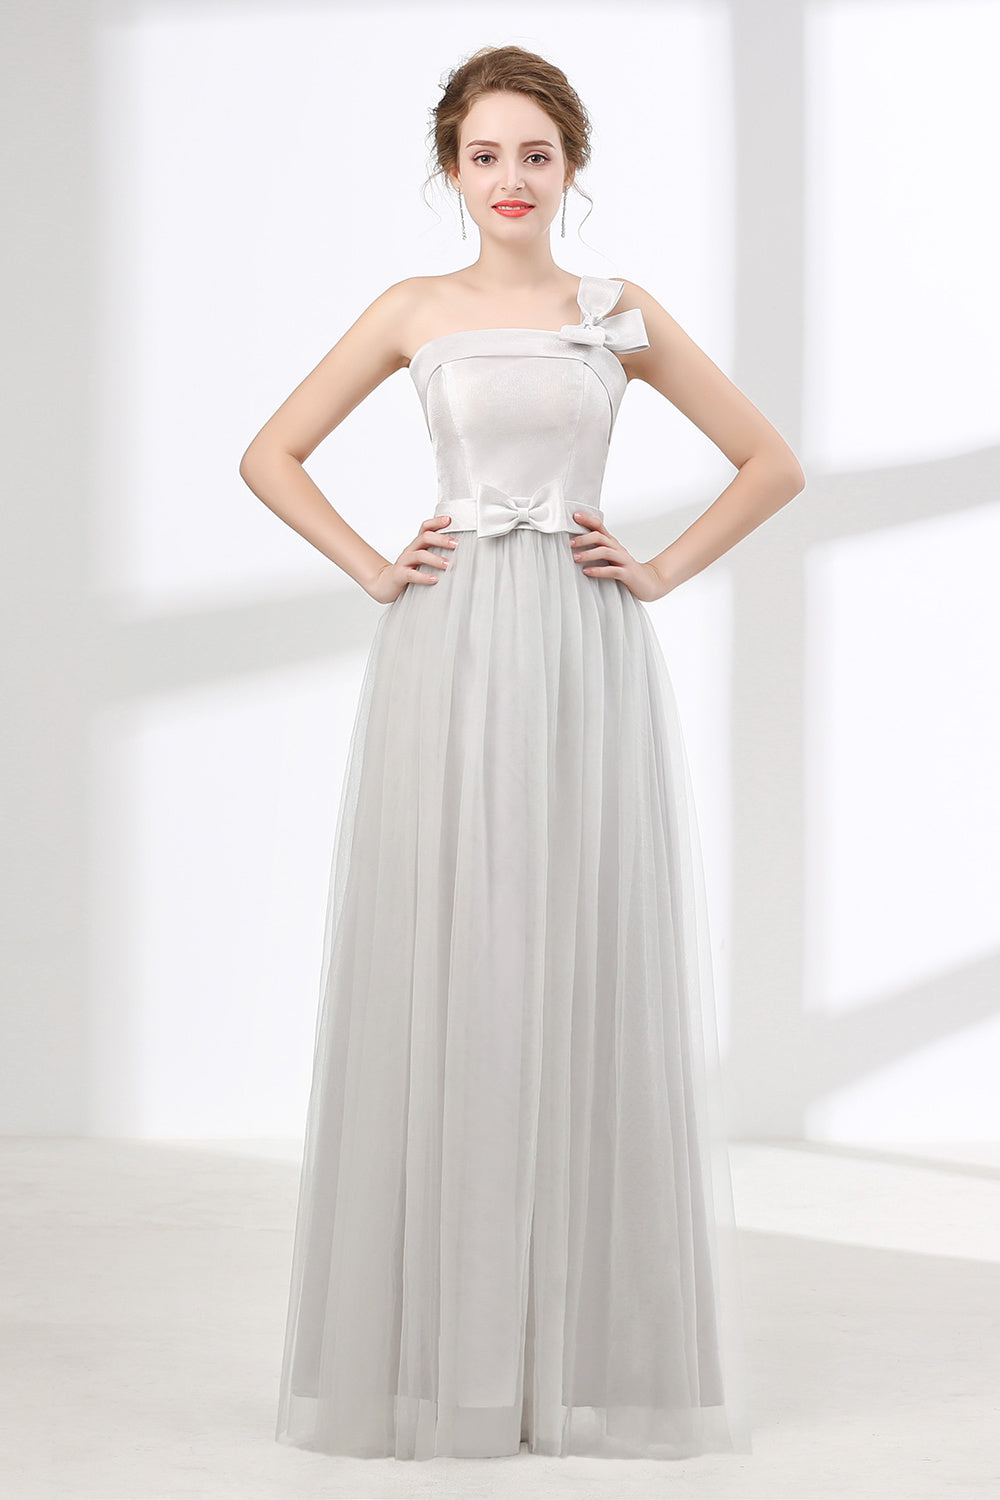 One Shoulder Soft Gray Floor Length Corset Prom Dresses outfit, Dream Dress